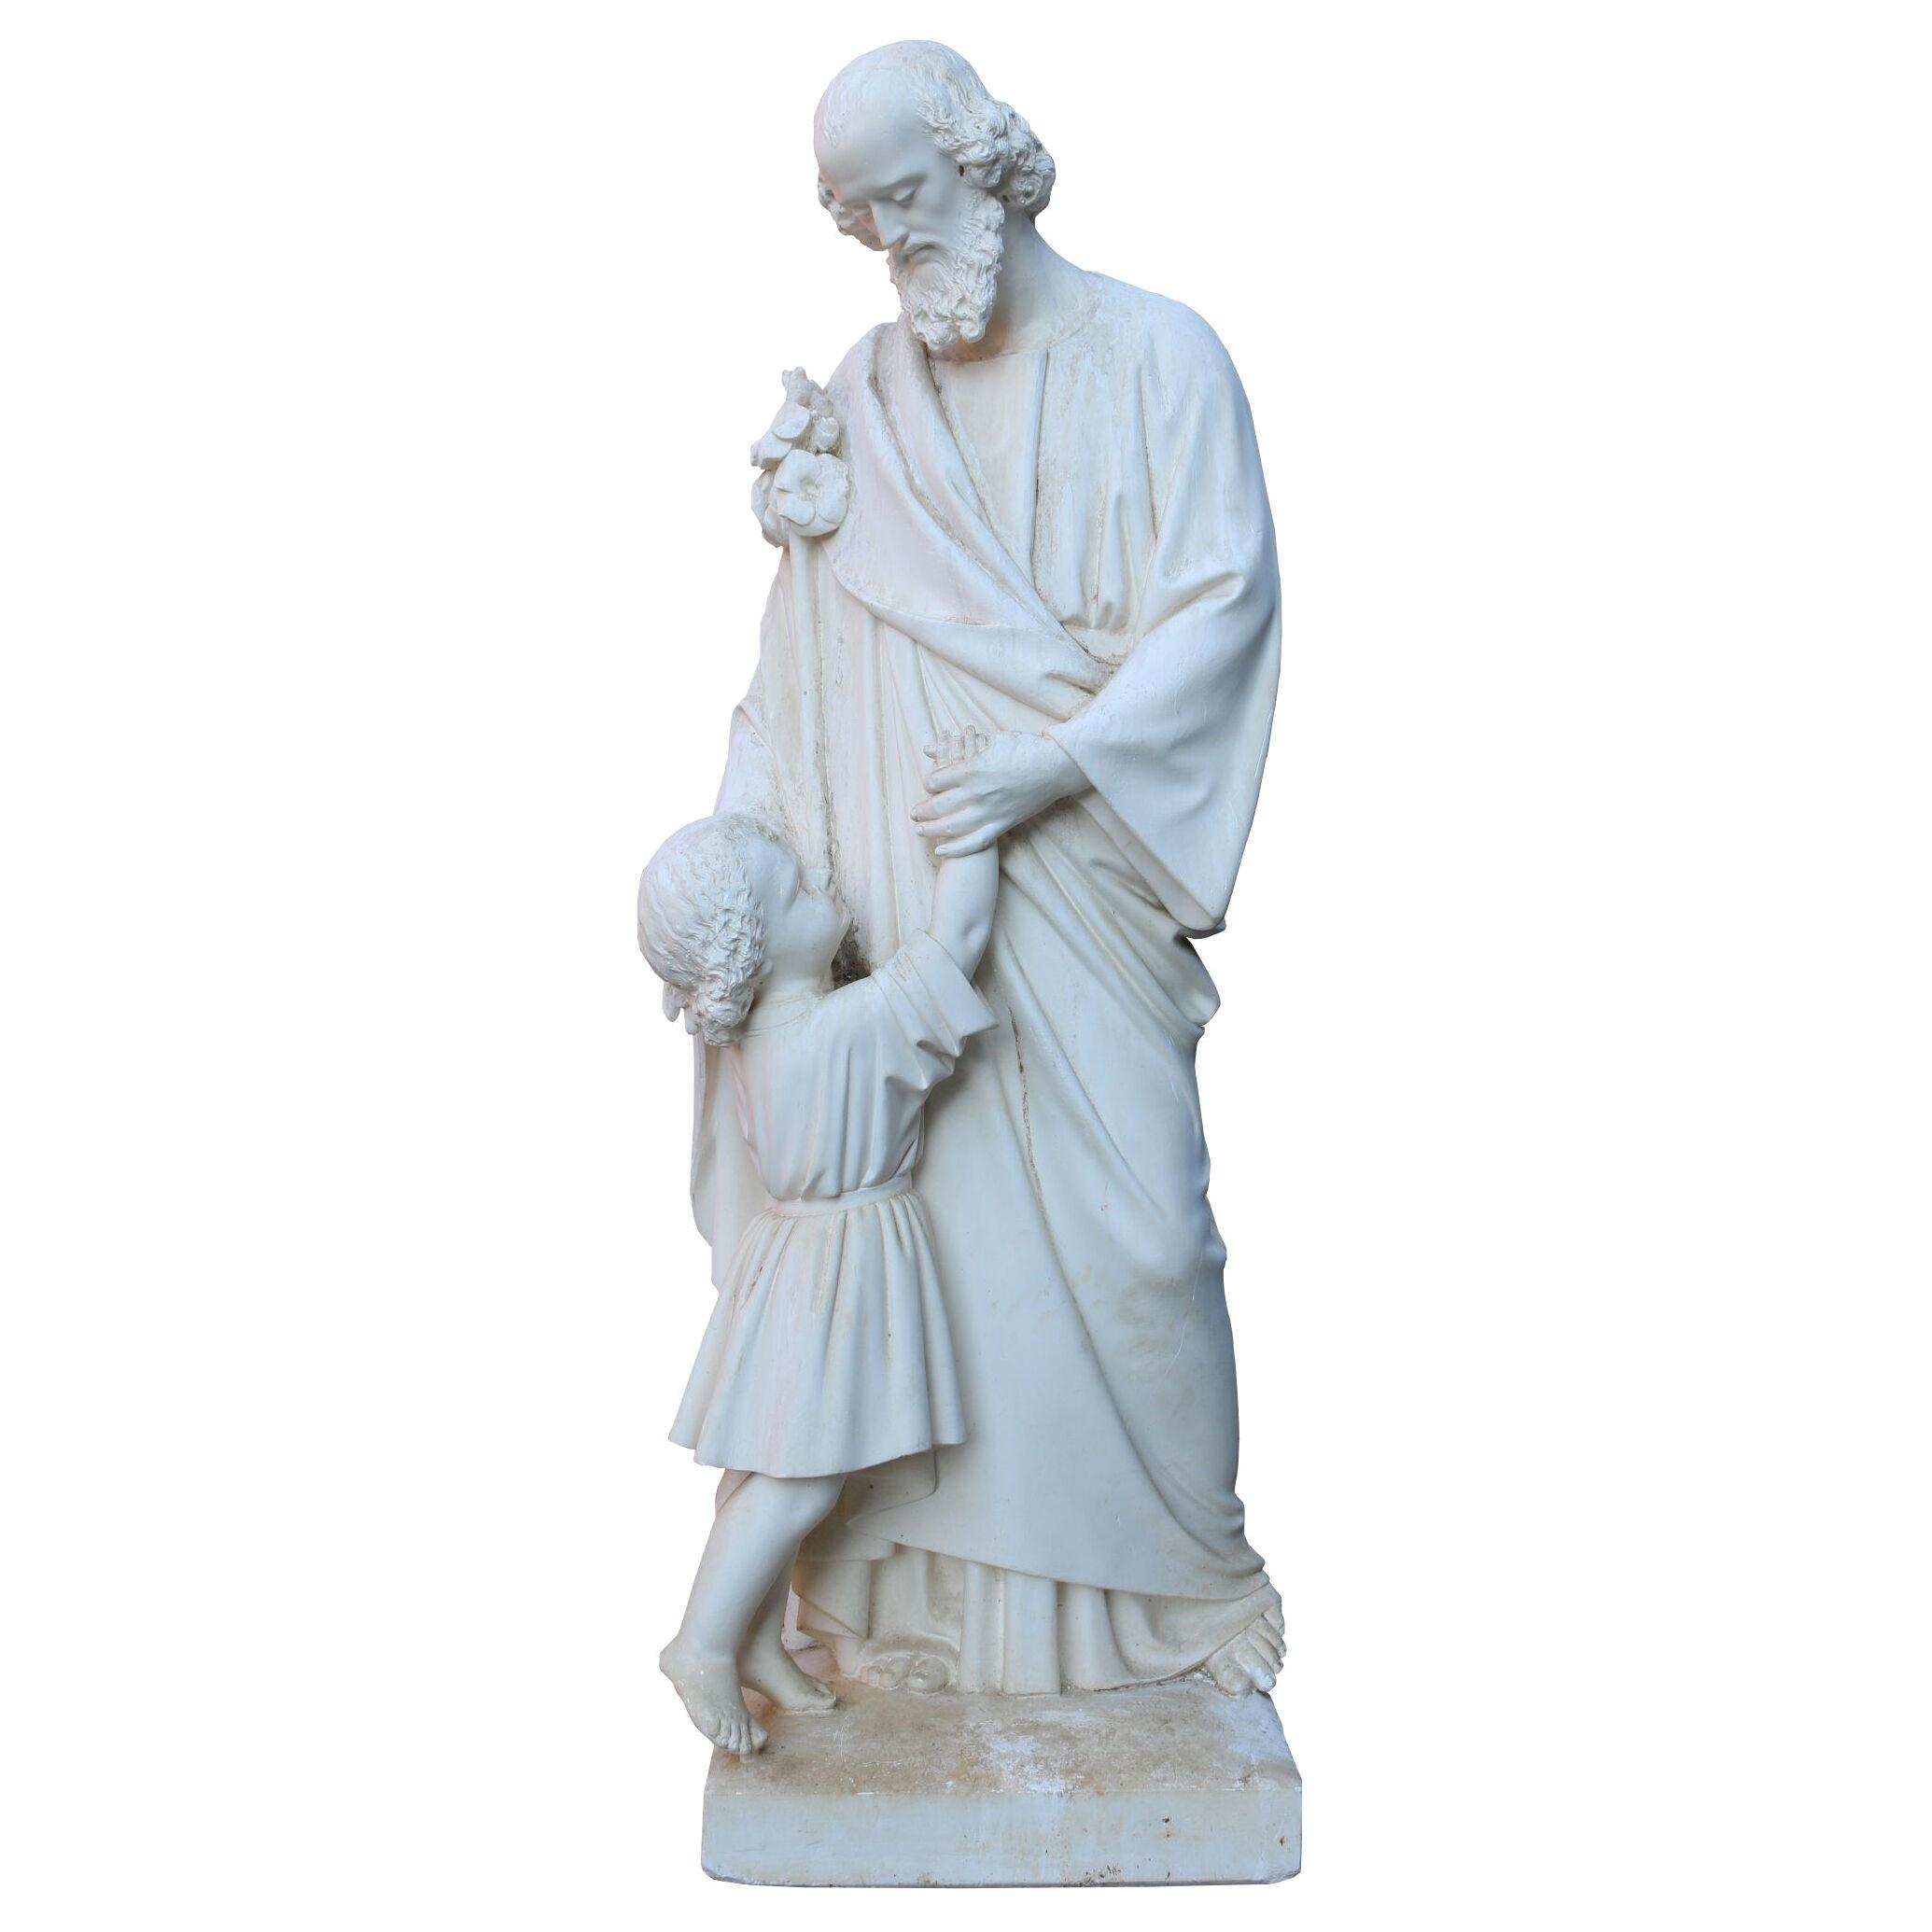 An Antique Plaster Sculpture or Statue of St. Joseph